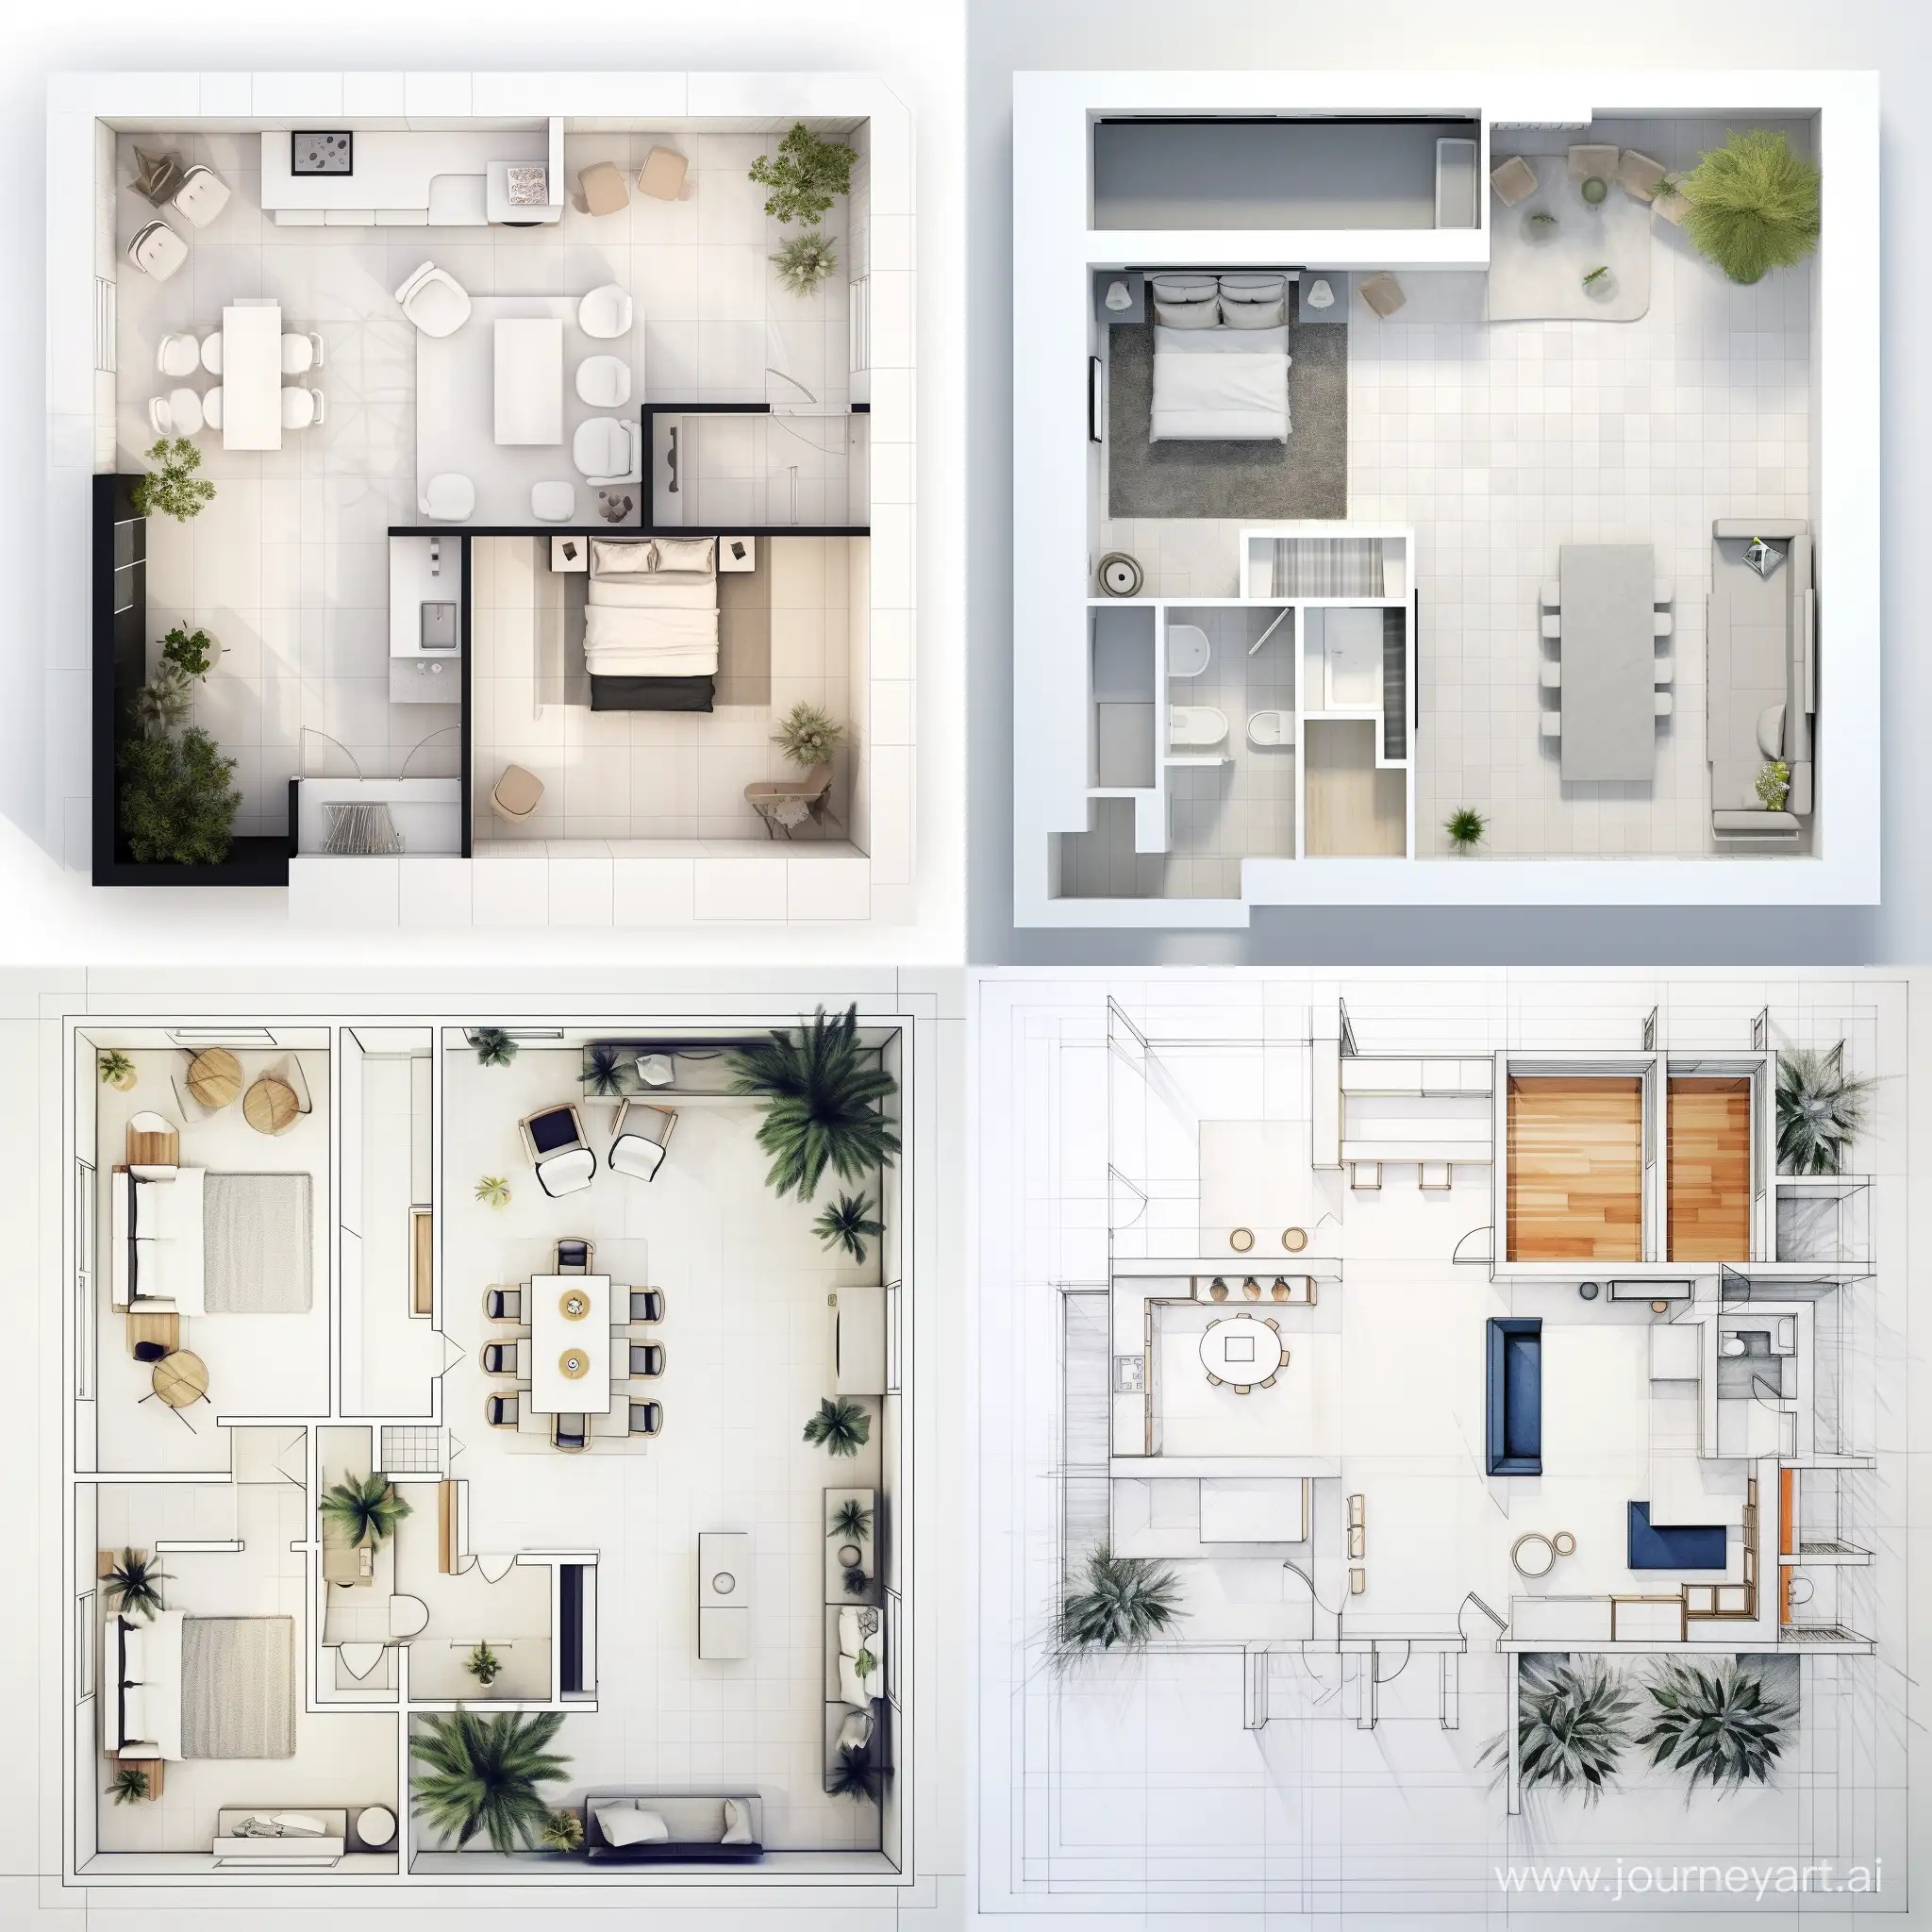 Contemporary-Open-Concept-10x10-Meter-Floor-Plan-with-Versatile-Wall-Configurations